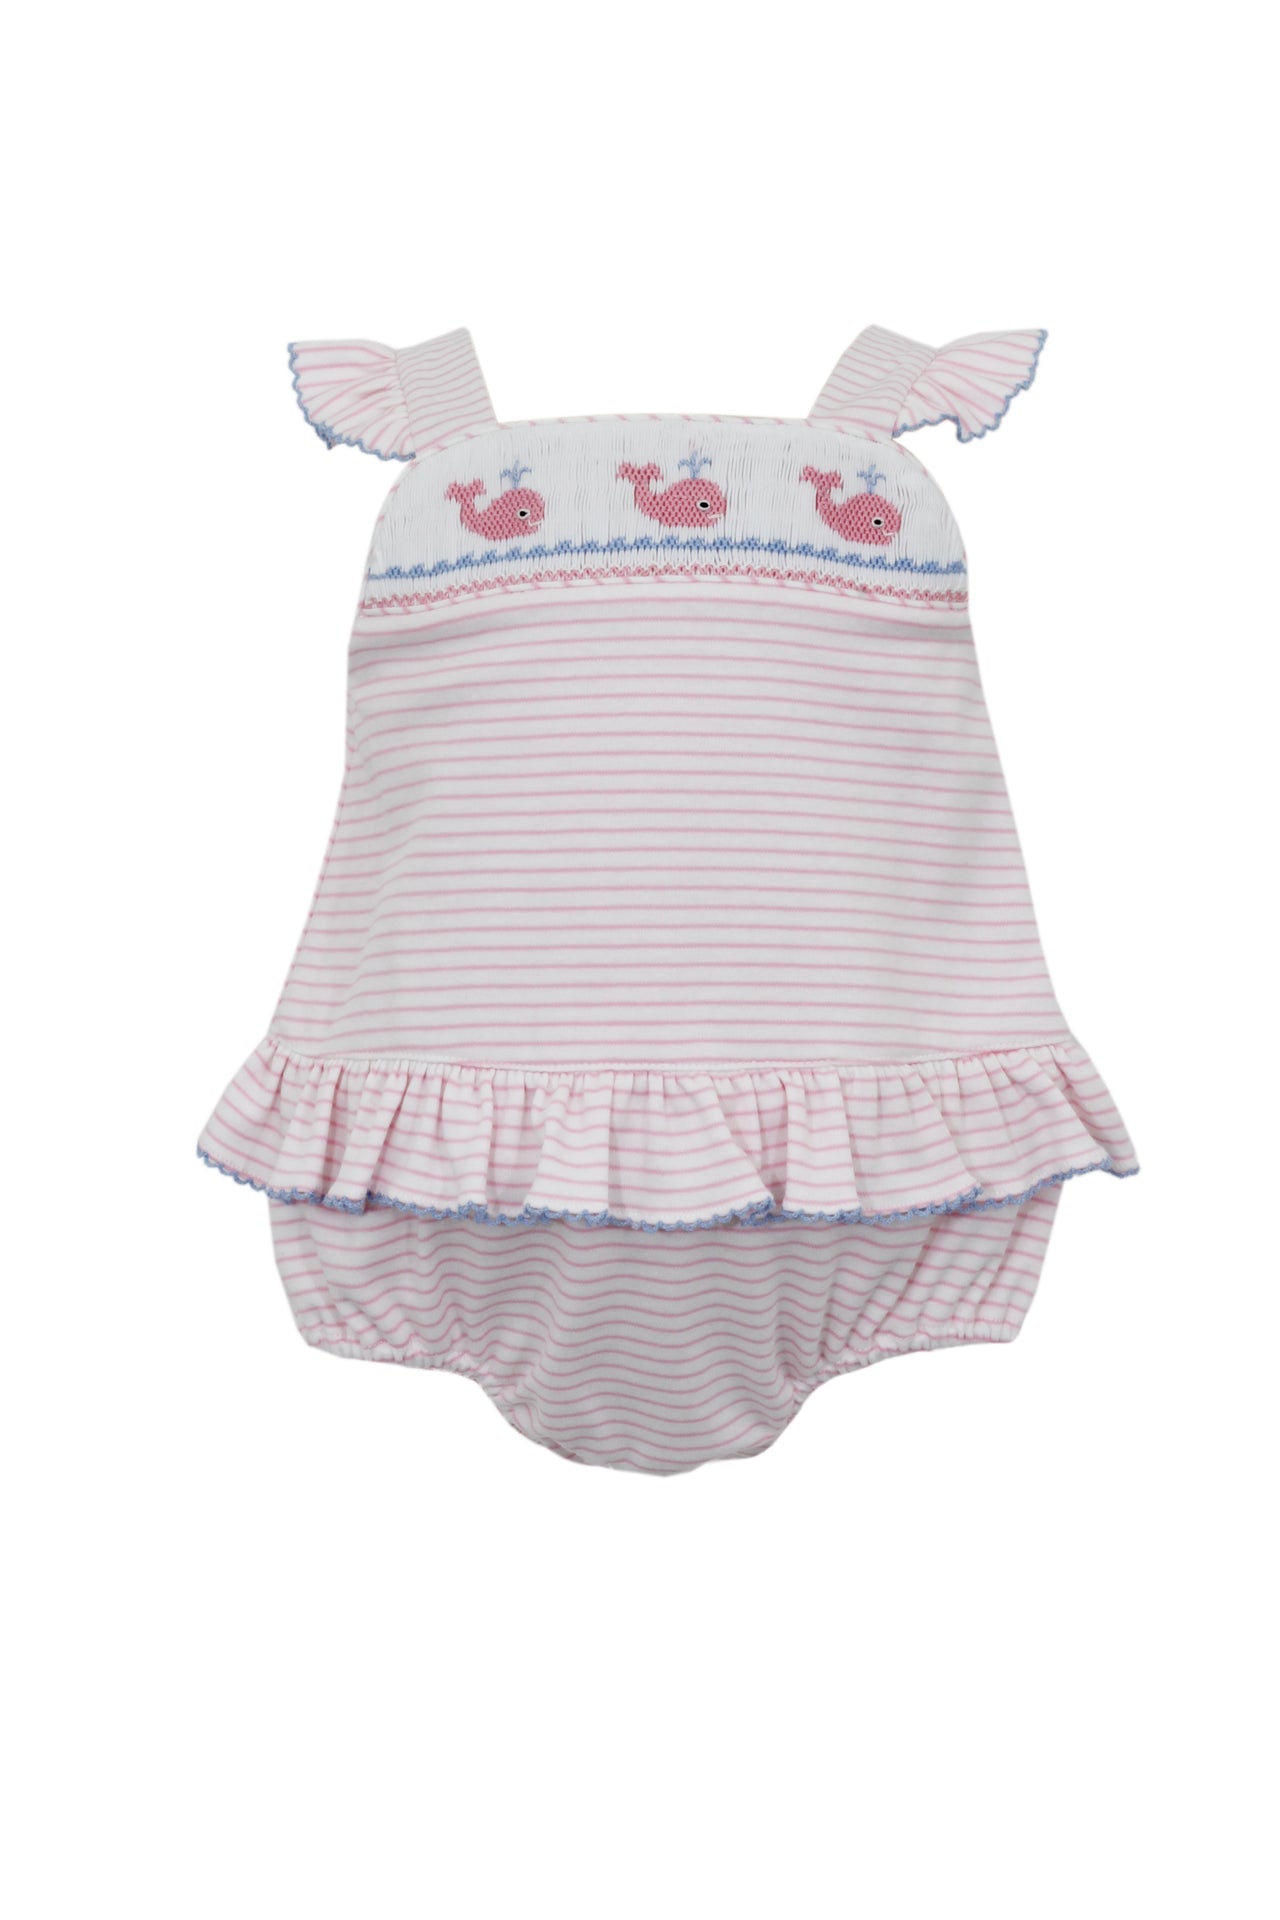 Petit Bebe Whale Pink Stripe Knit Girl's Sunsuit 435F-MS24 5103